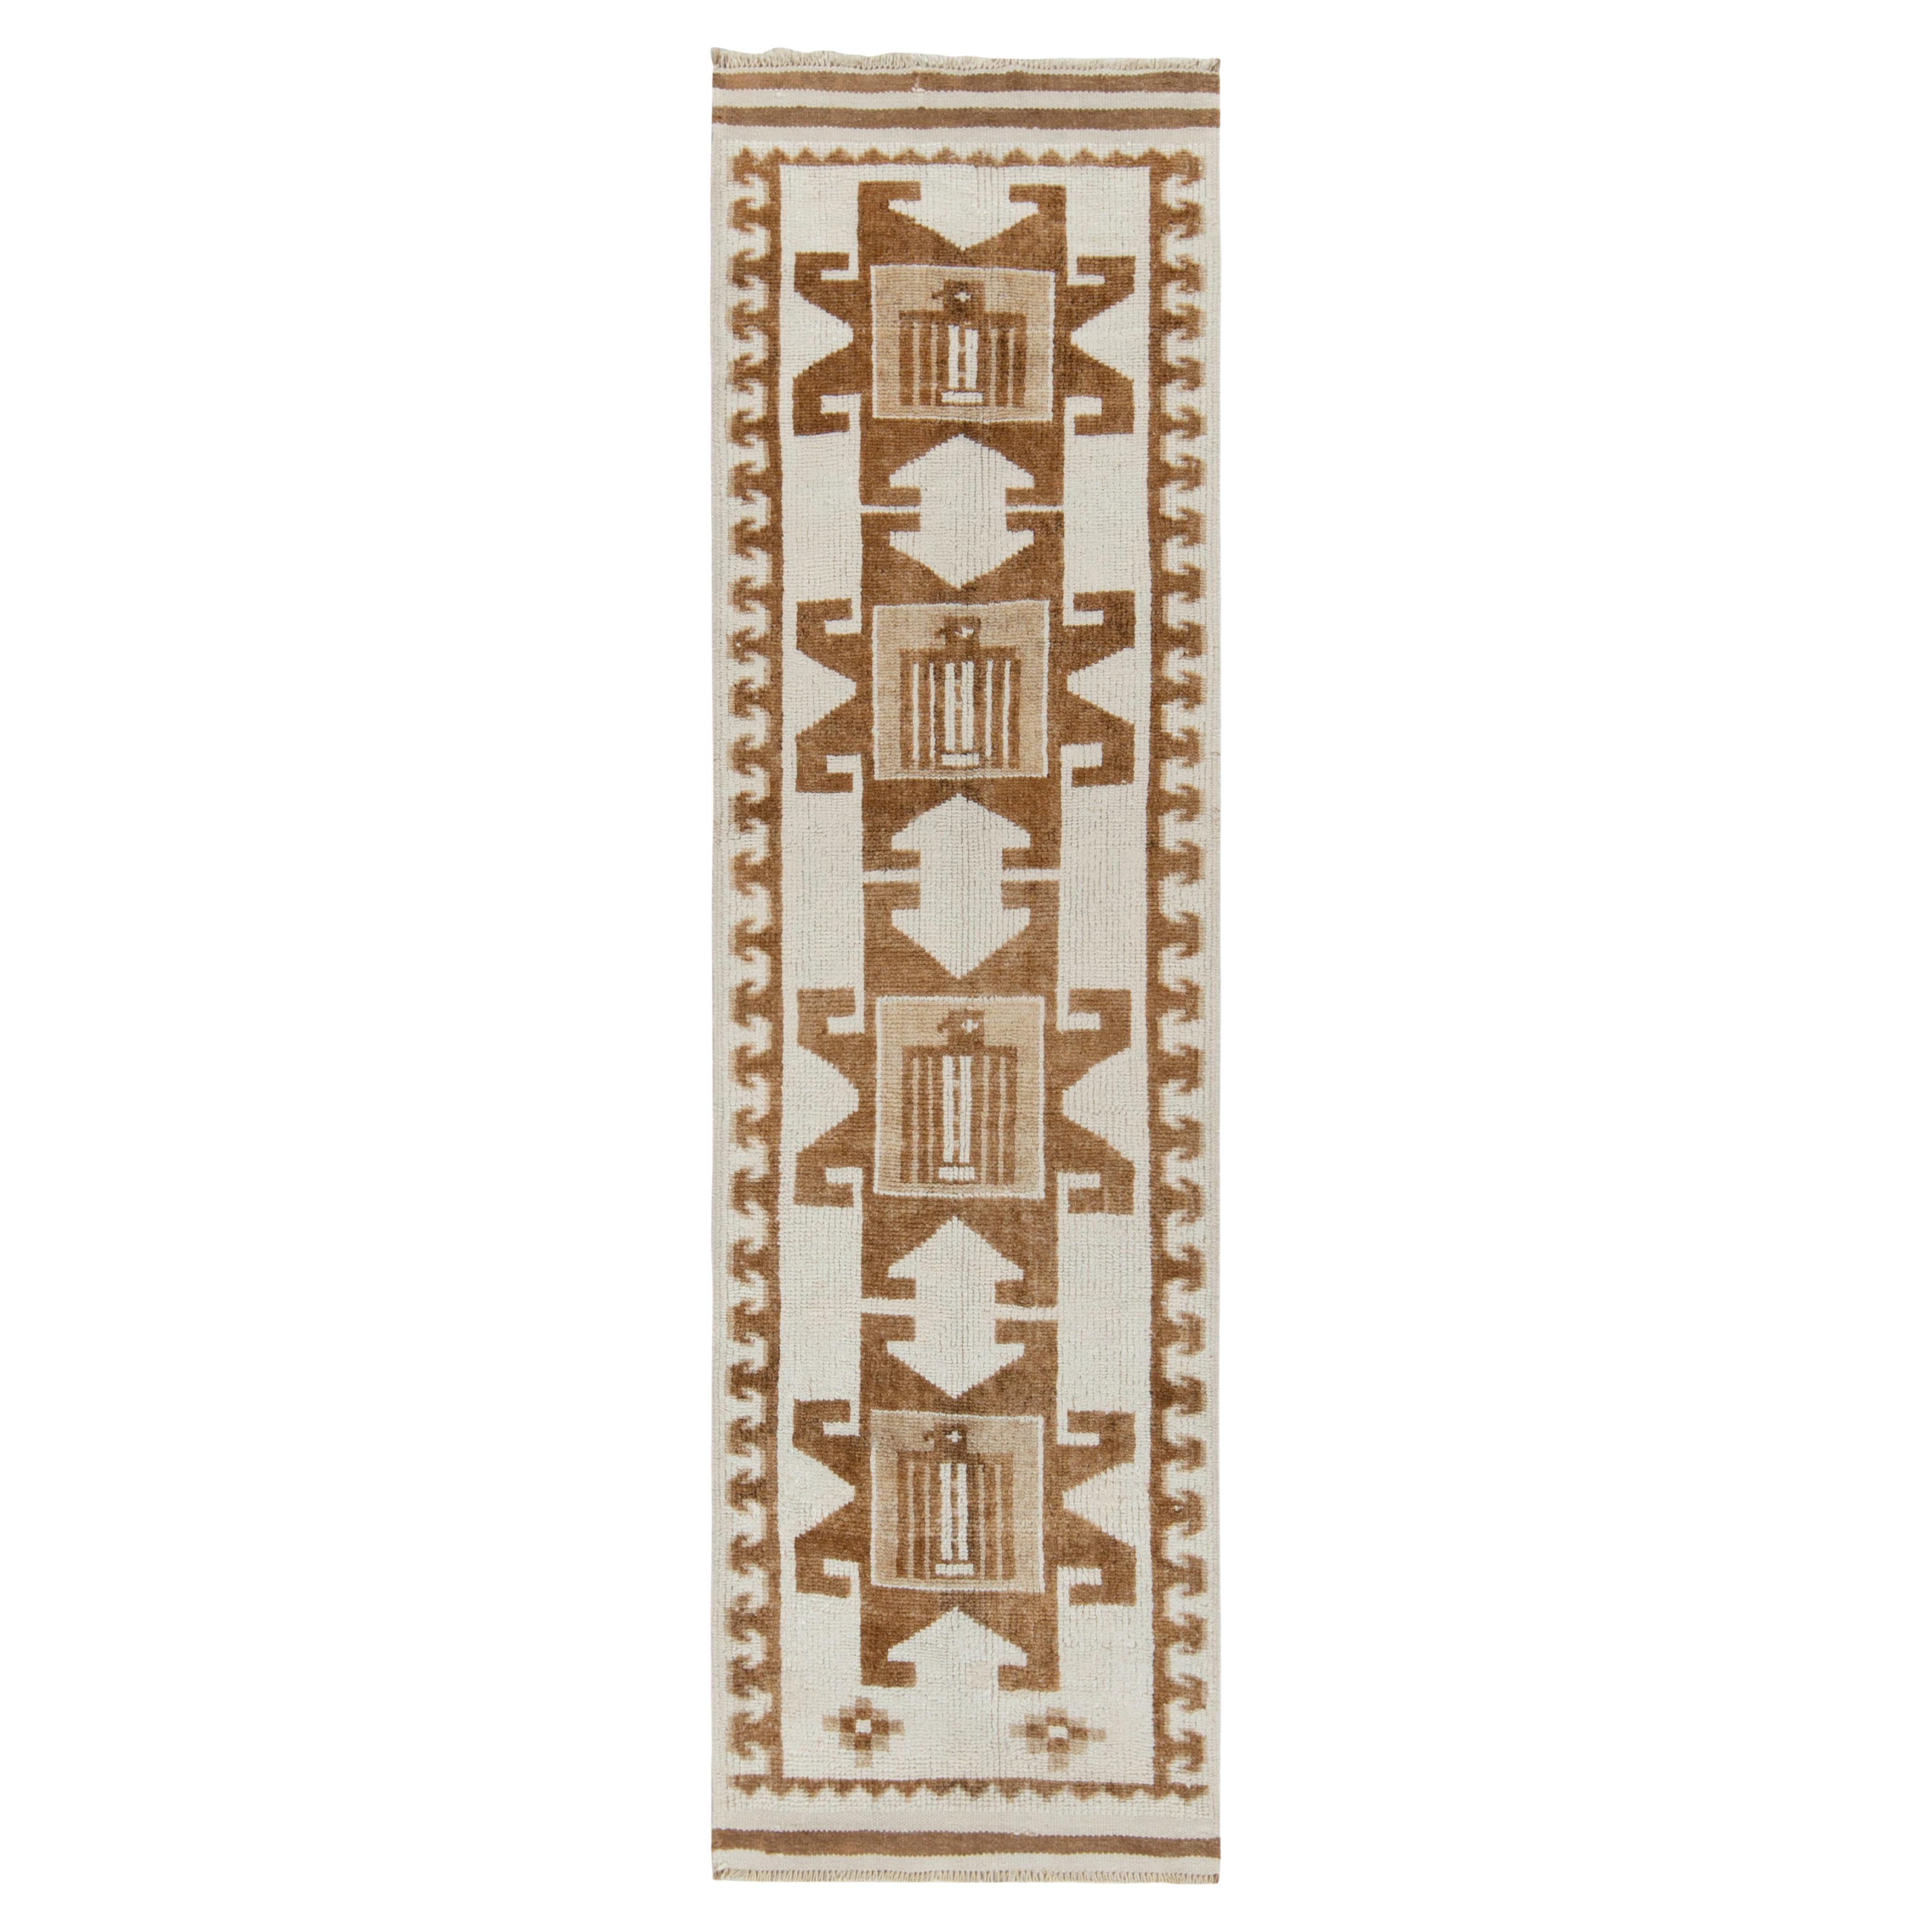 Vintage Tribal Runner in White & Beige-Brown Geometric Patterns by Rug & Kilim For Sale